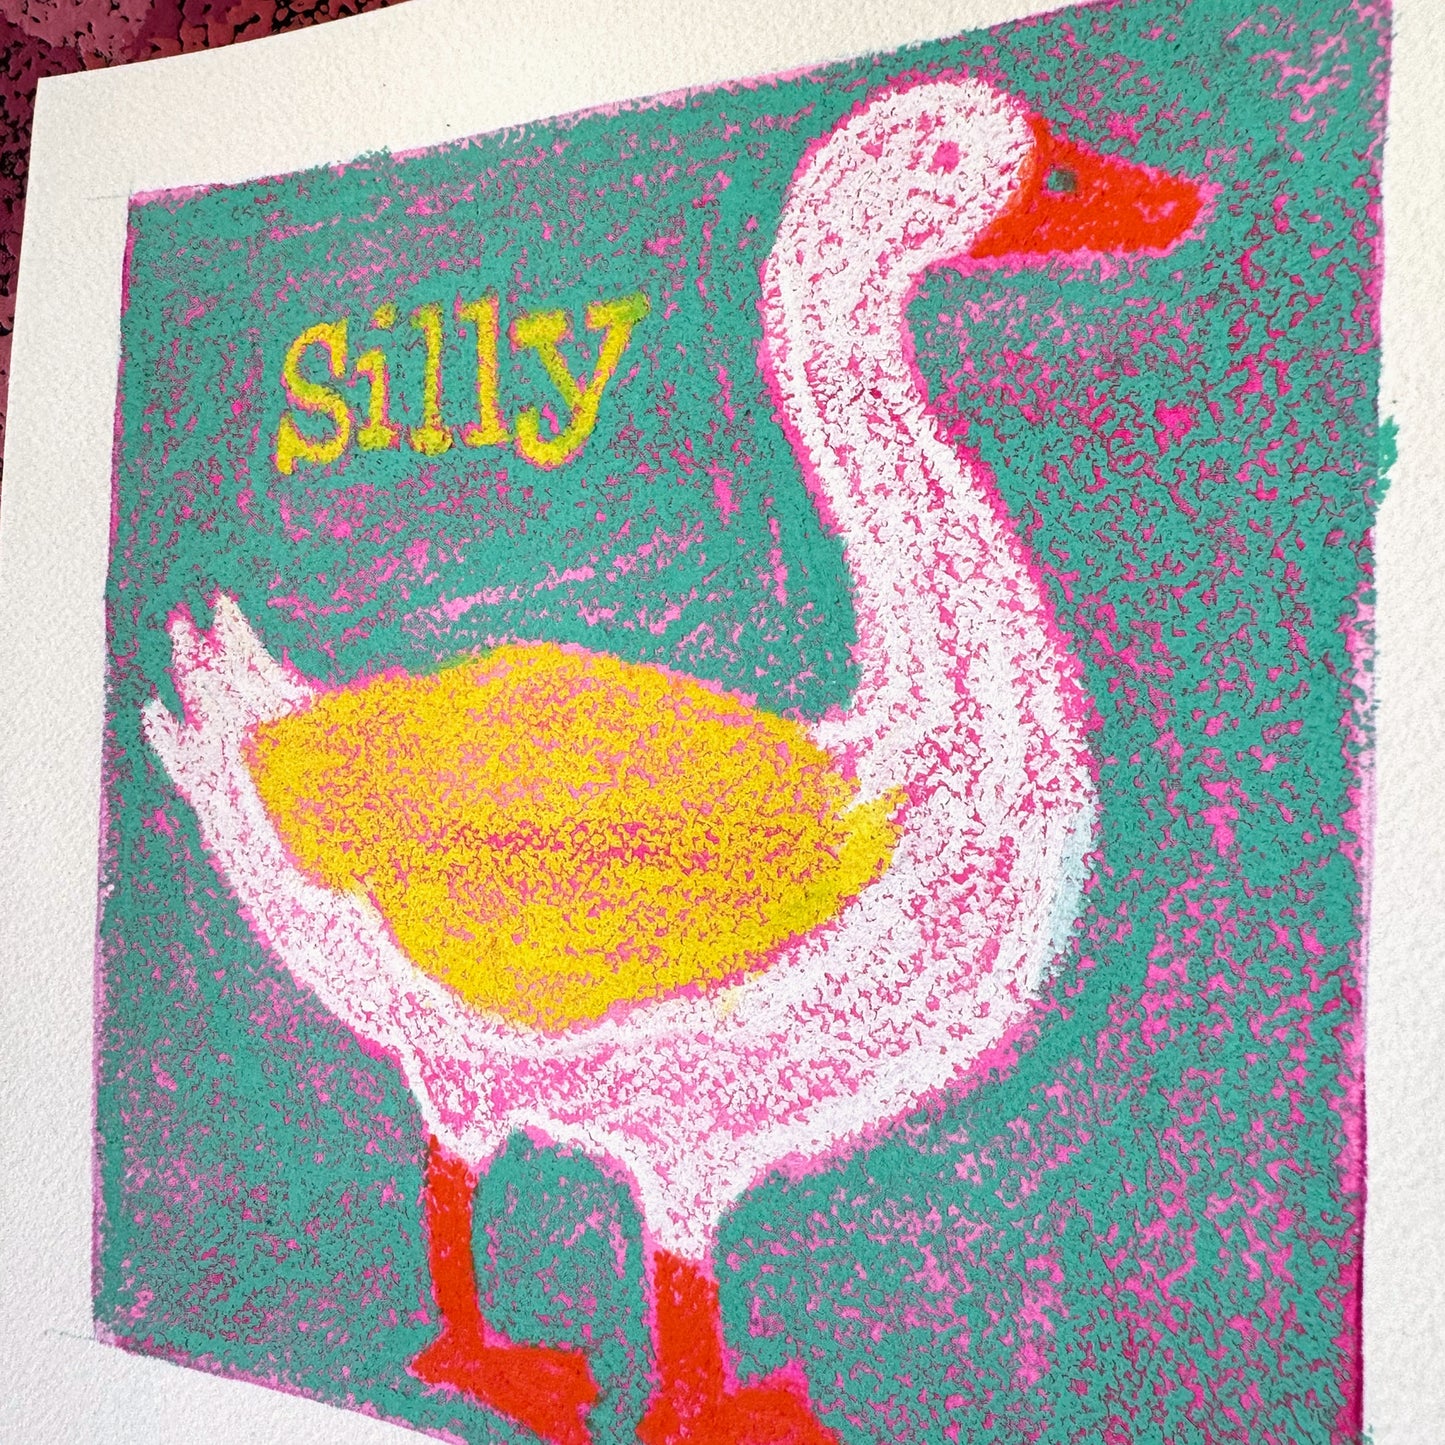 Silly Goose (Blue) Original Oil Pastel Artwork